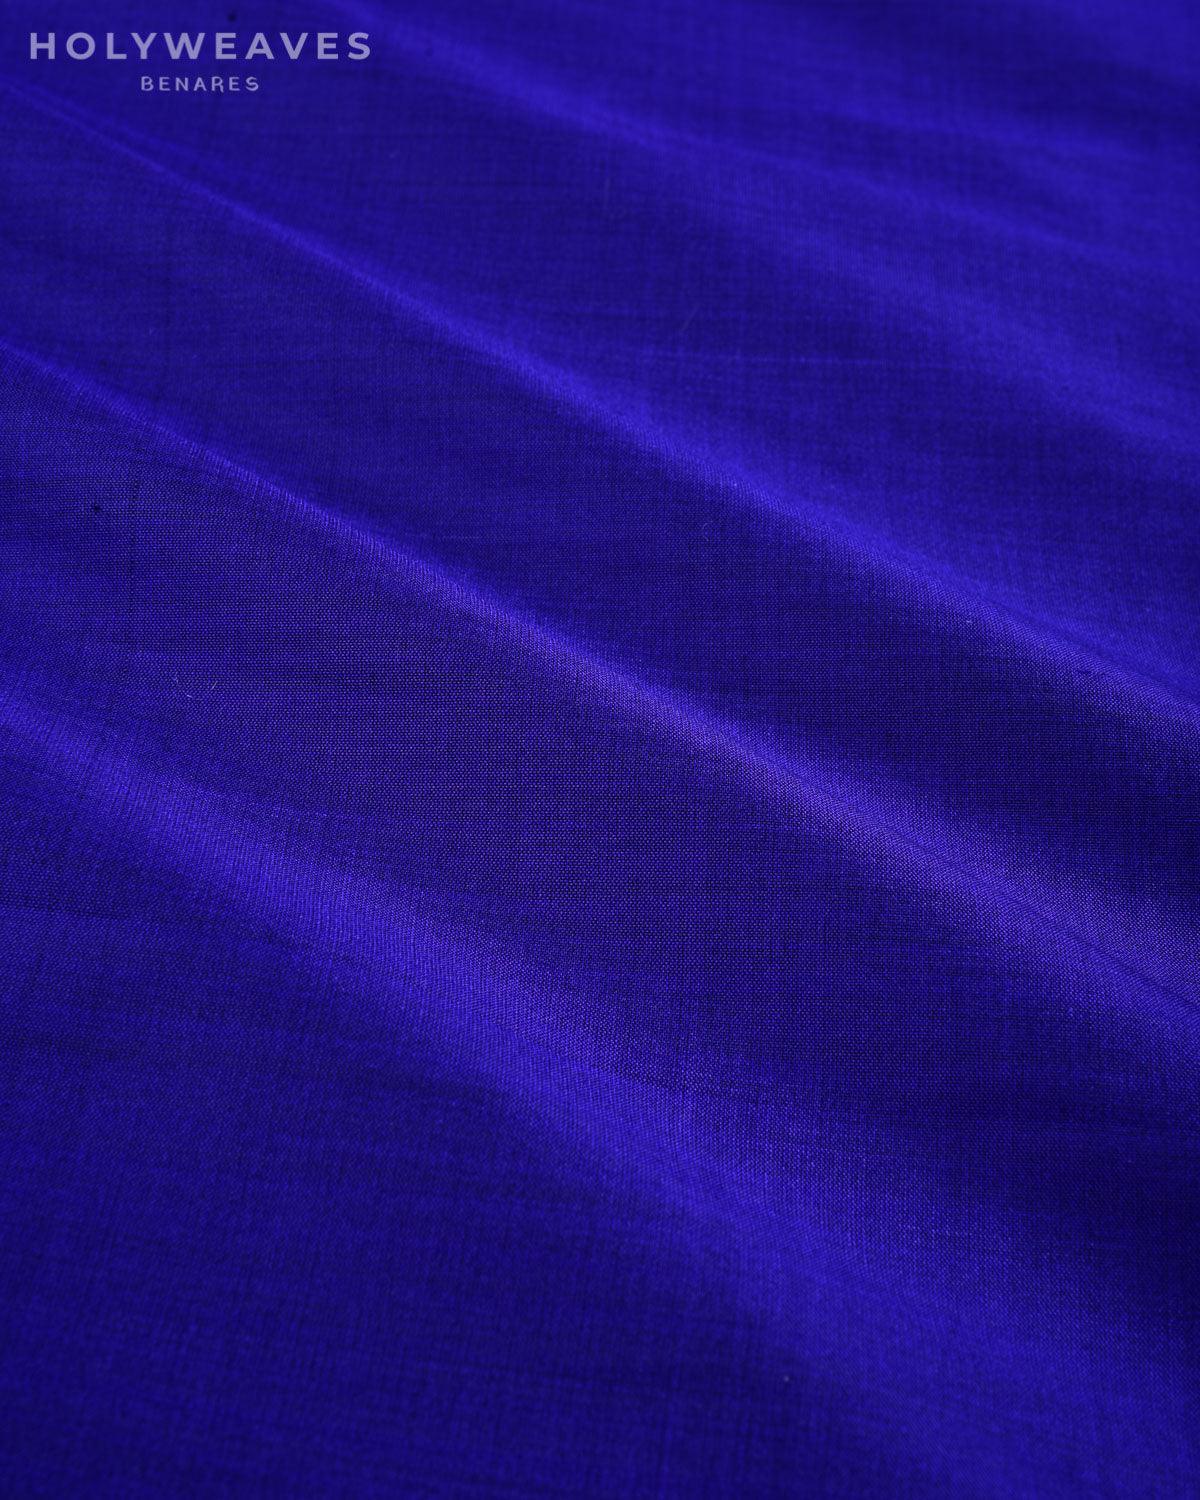 Midnight Blue Banarasi Plain Woven Spun Silk Fabric - By HolyWeaves, Benares